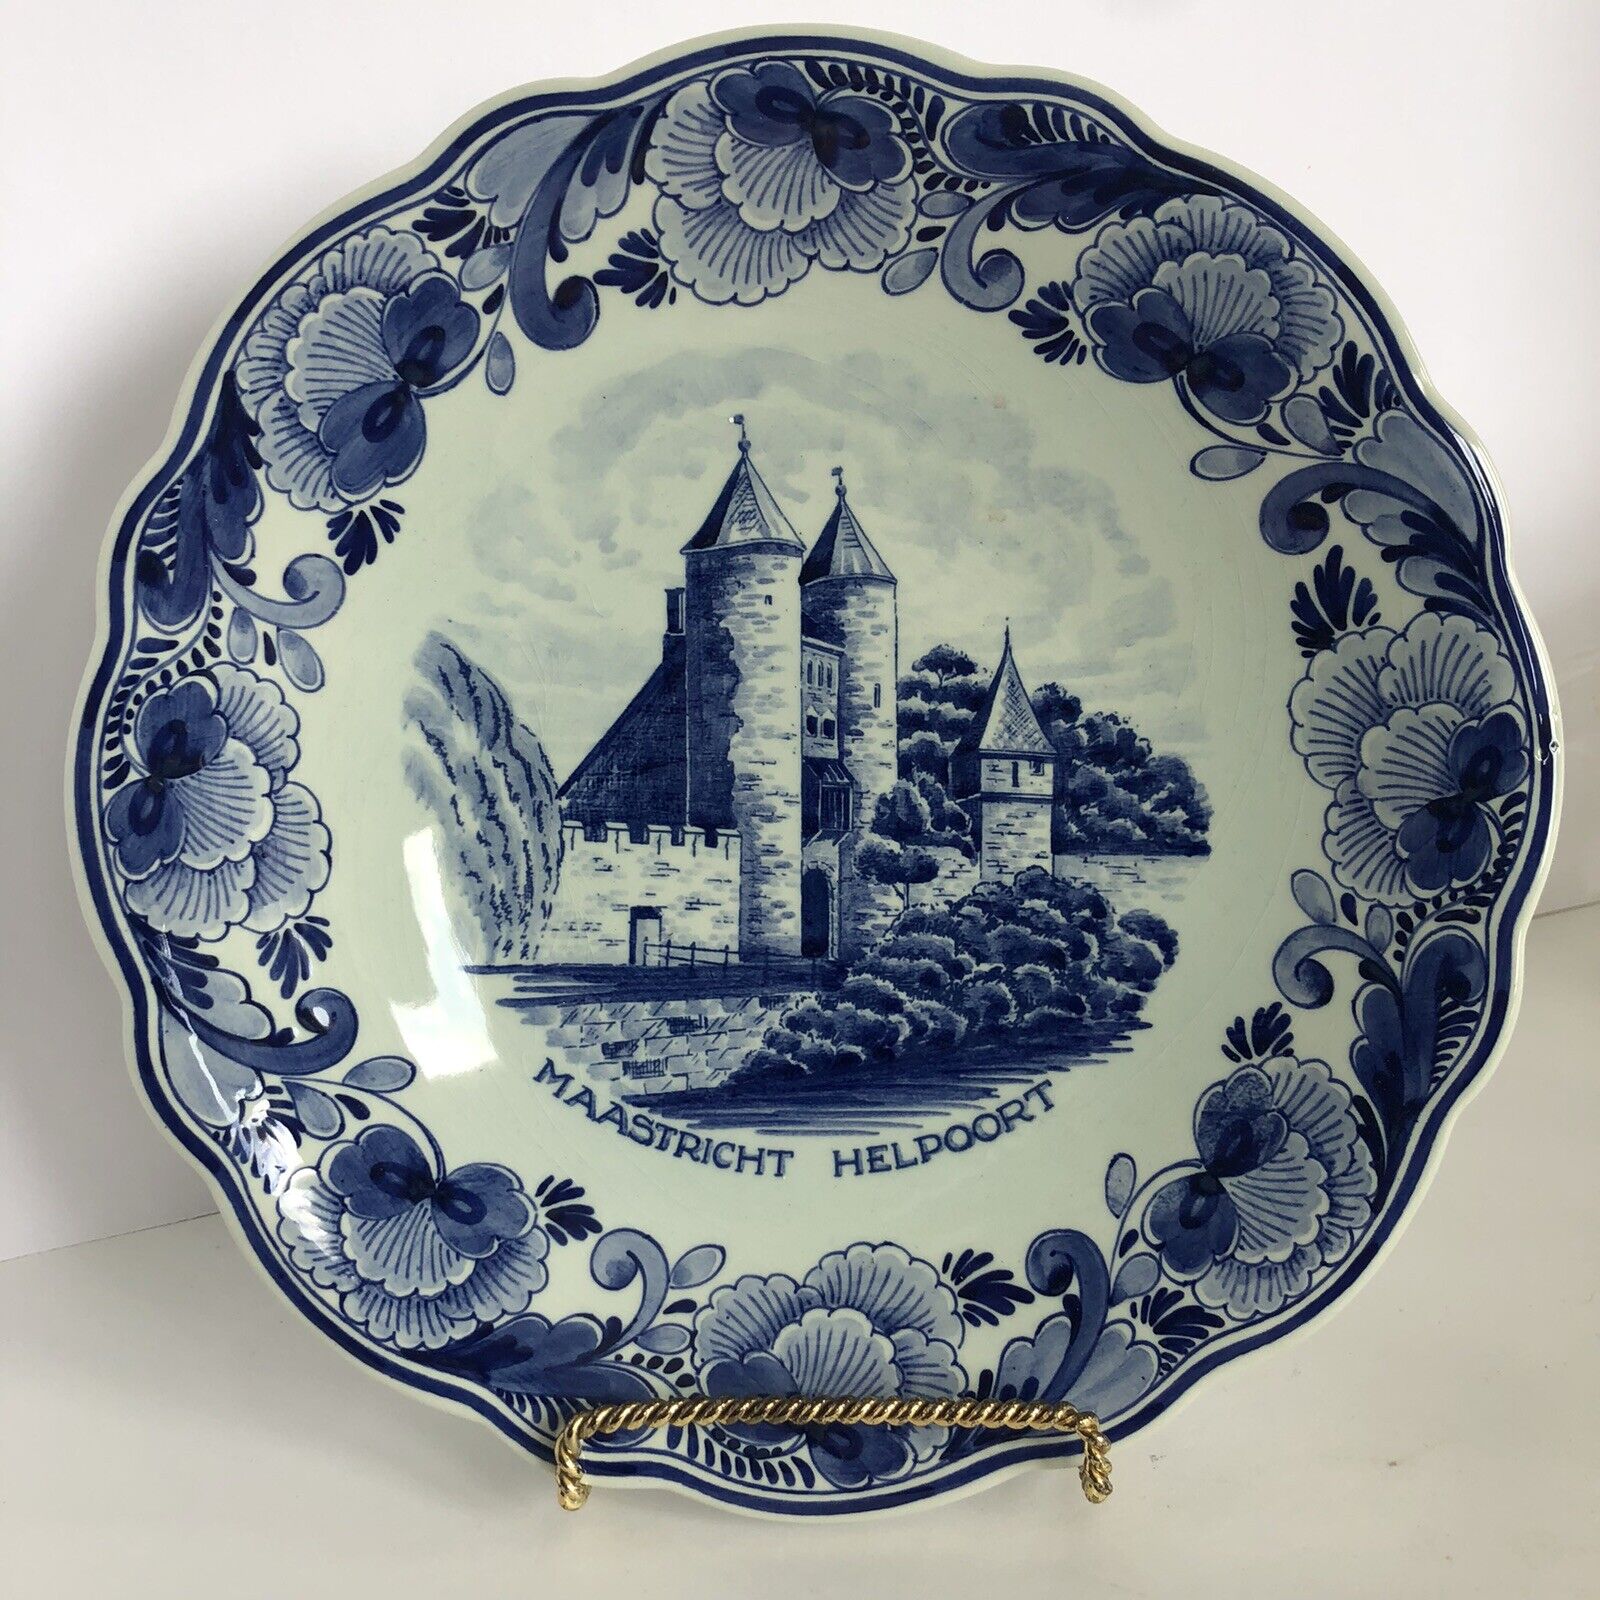 Vintage Maastricht Helpoort Delft Blue Collector Plate 1959 Norelco Holland EUC